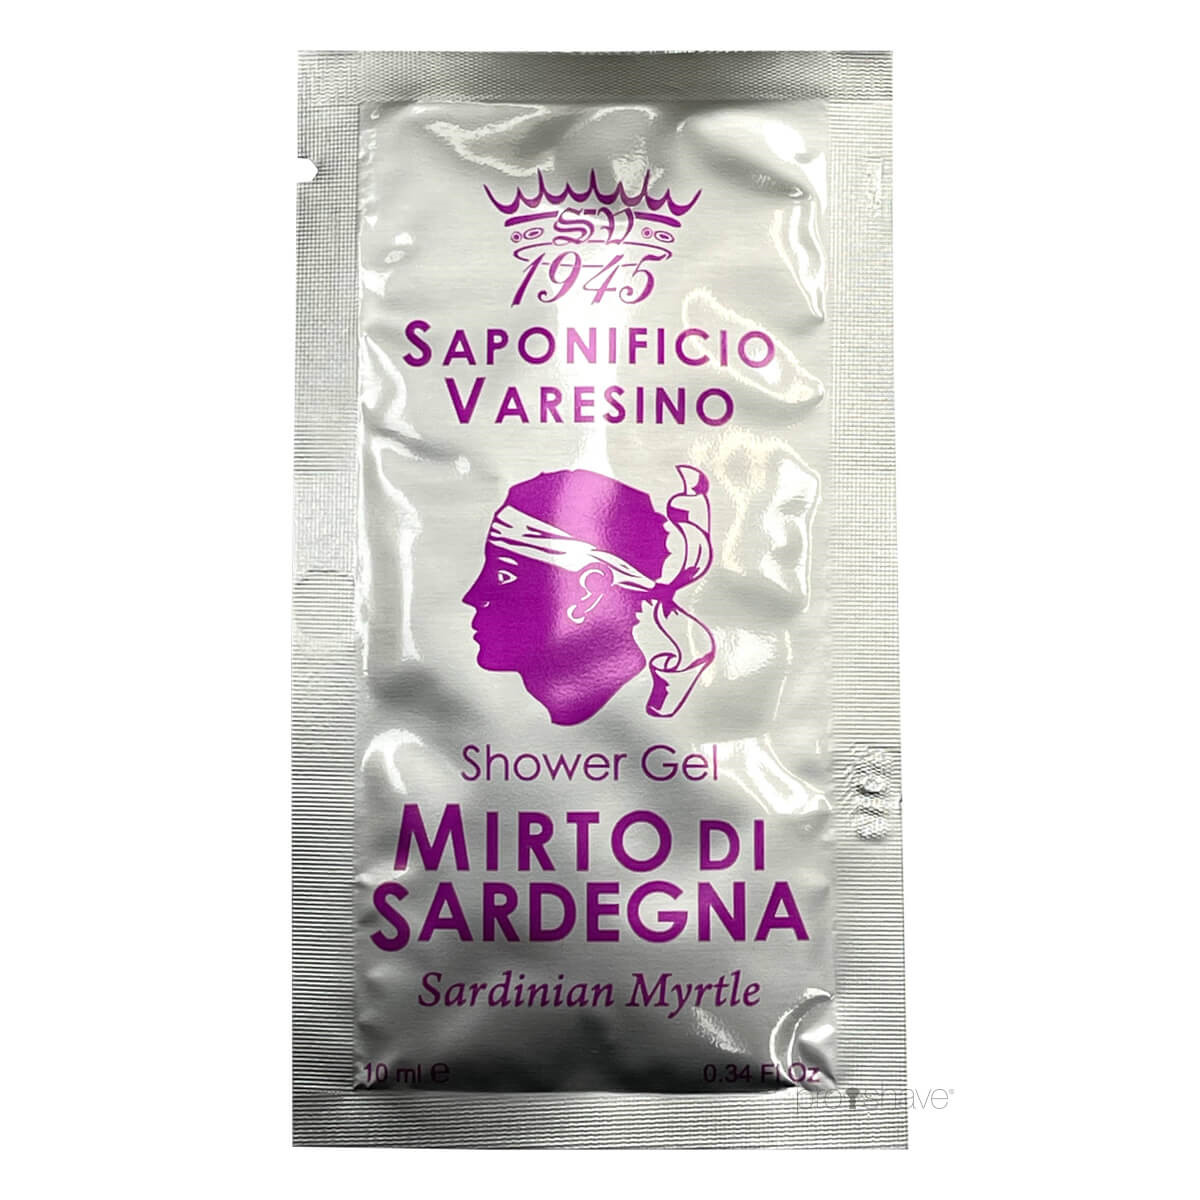 Billede af Saponificio Varesino Shower Gel, Mirto di Sardegna, Sample, 10 ml.